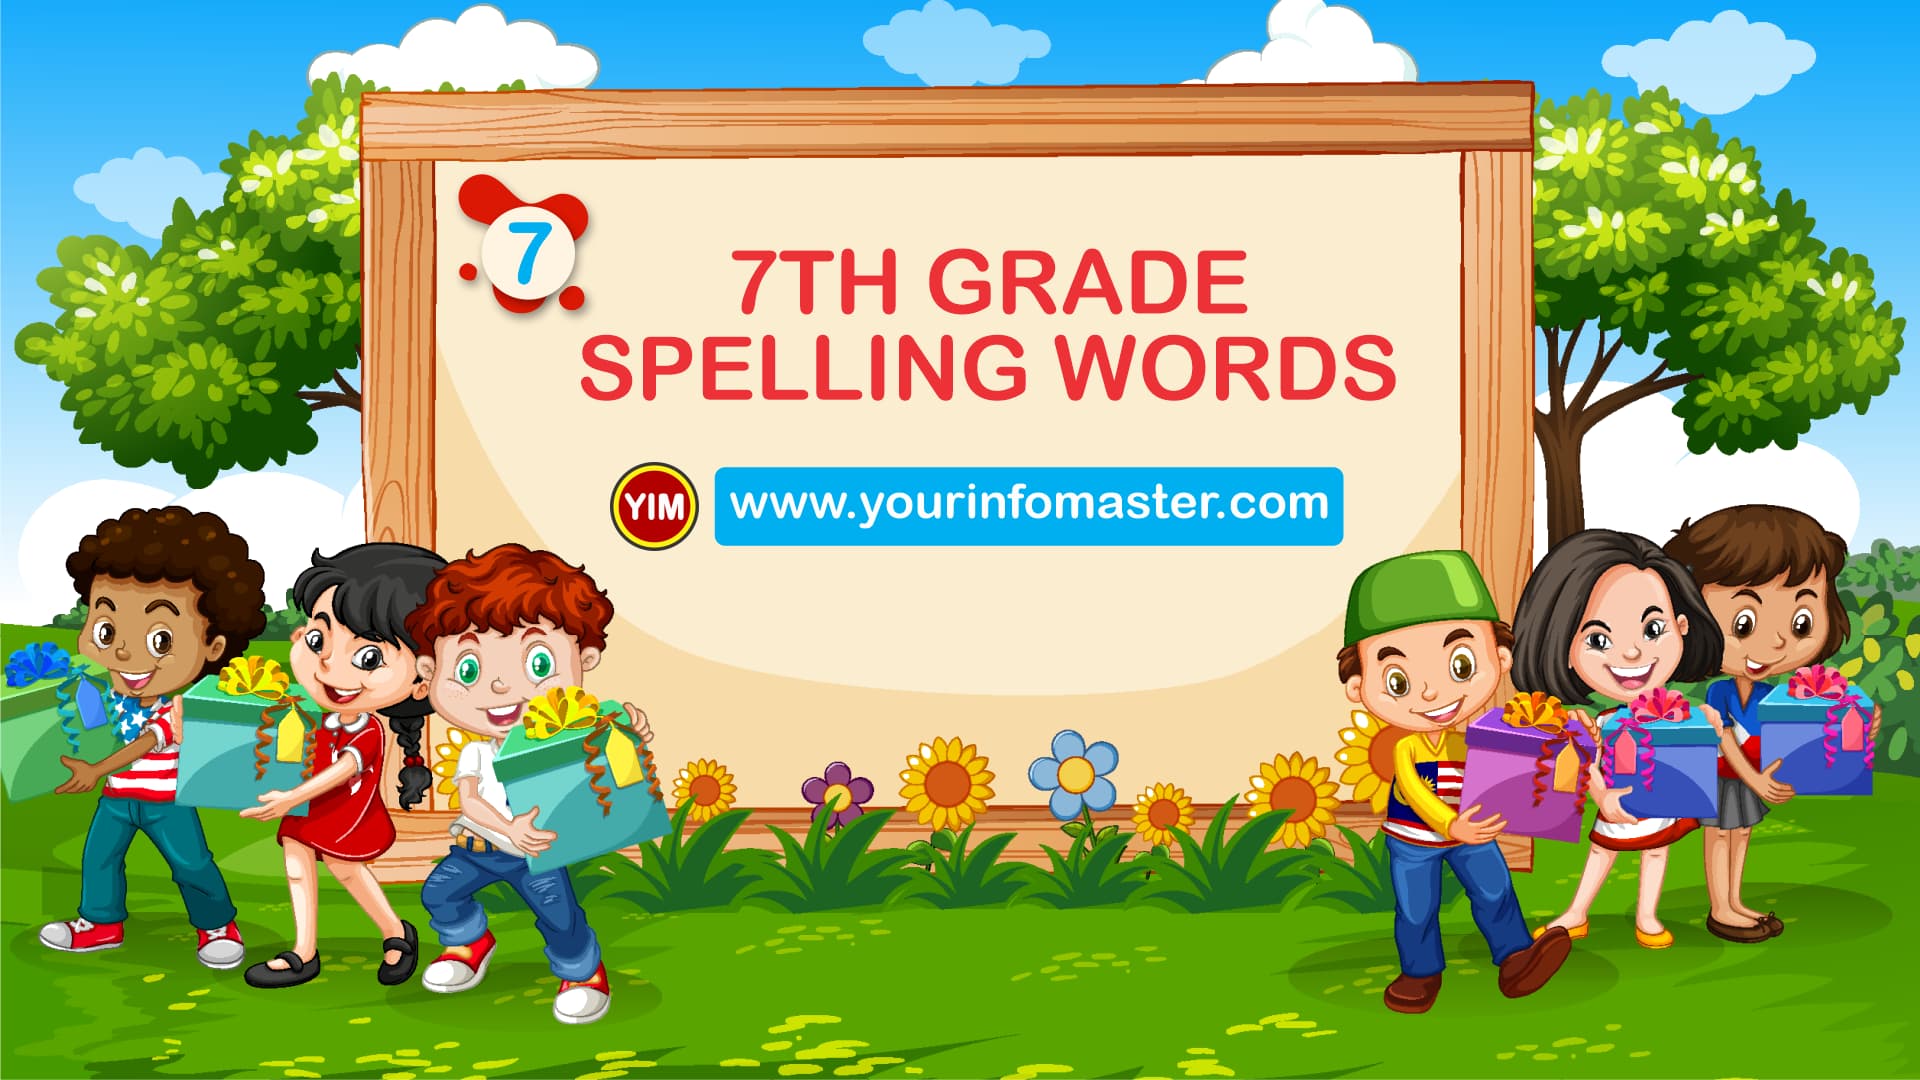 7th grade spelling bee words 2021